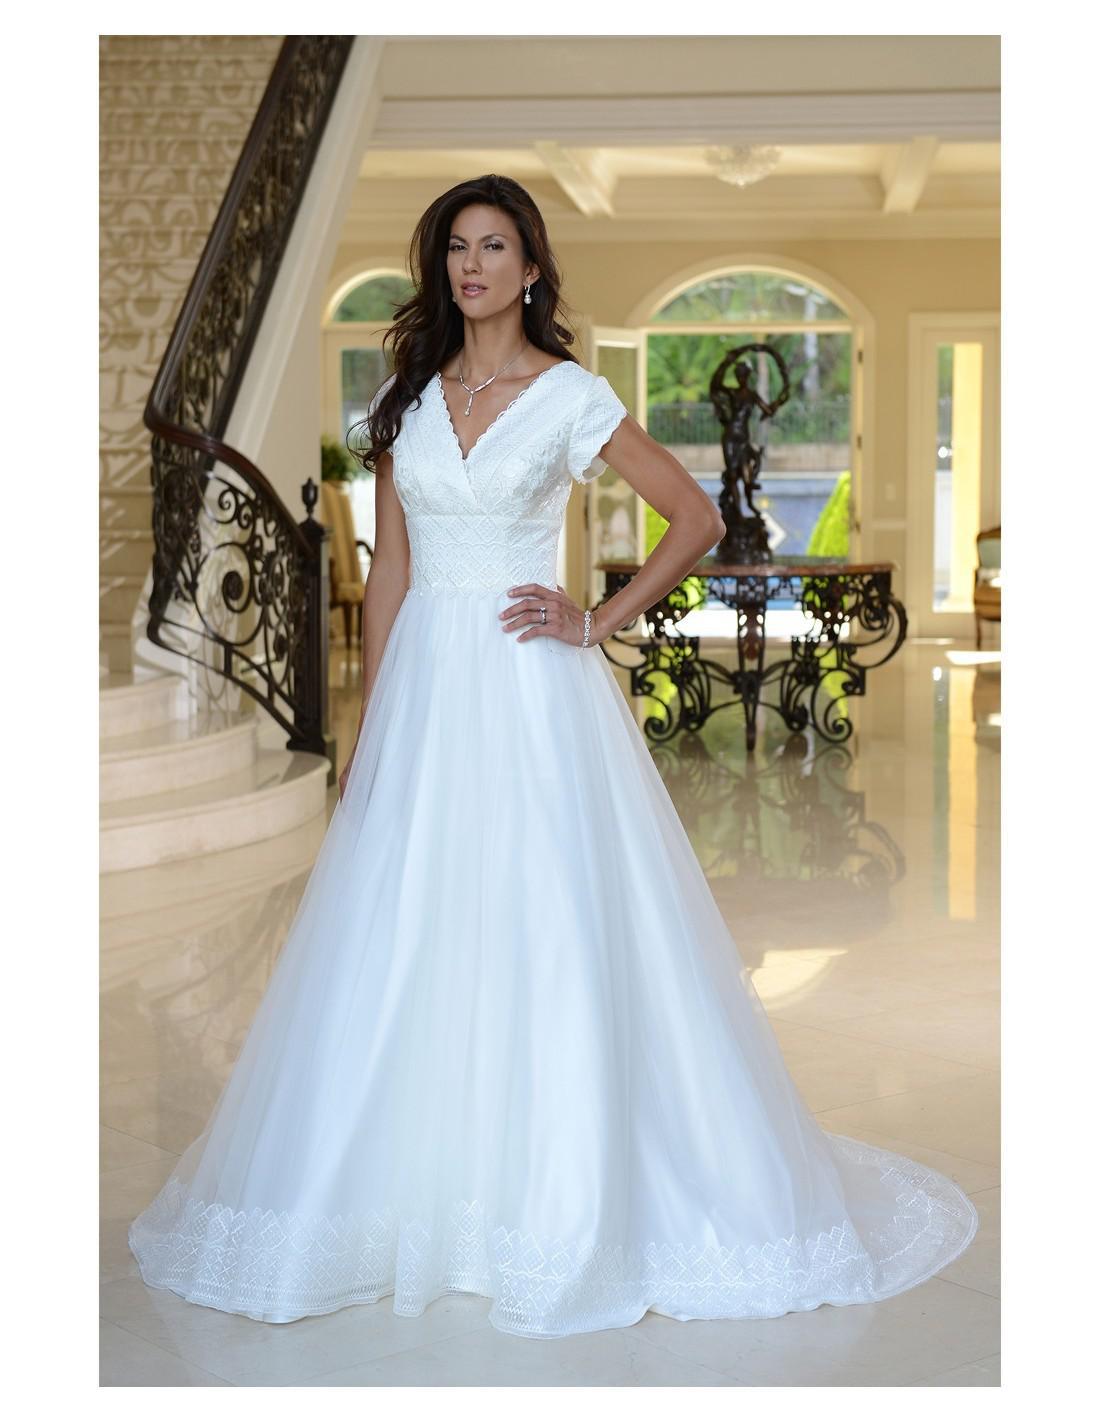 Venus Bridal TB7743 Modest Wedding Dress from A Closet Full of Dresses